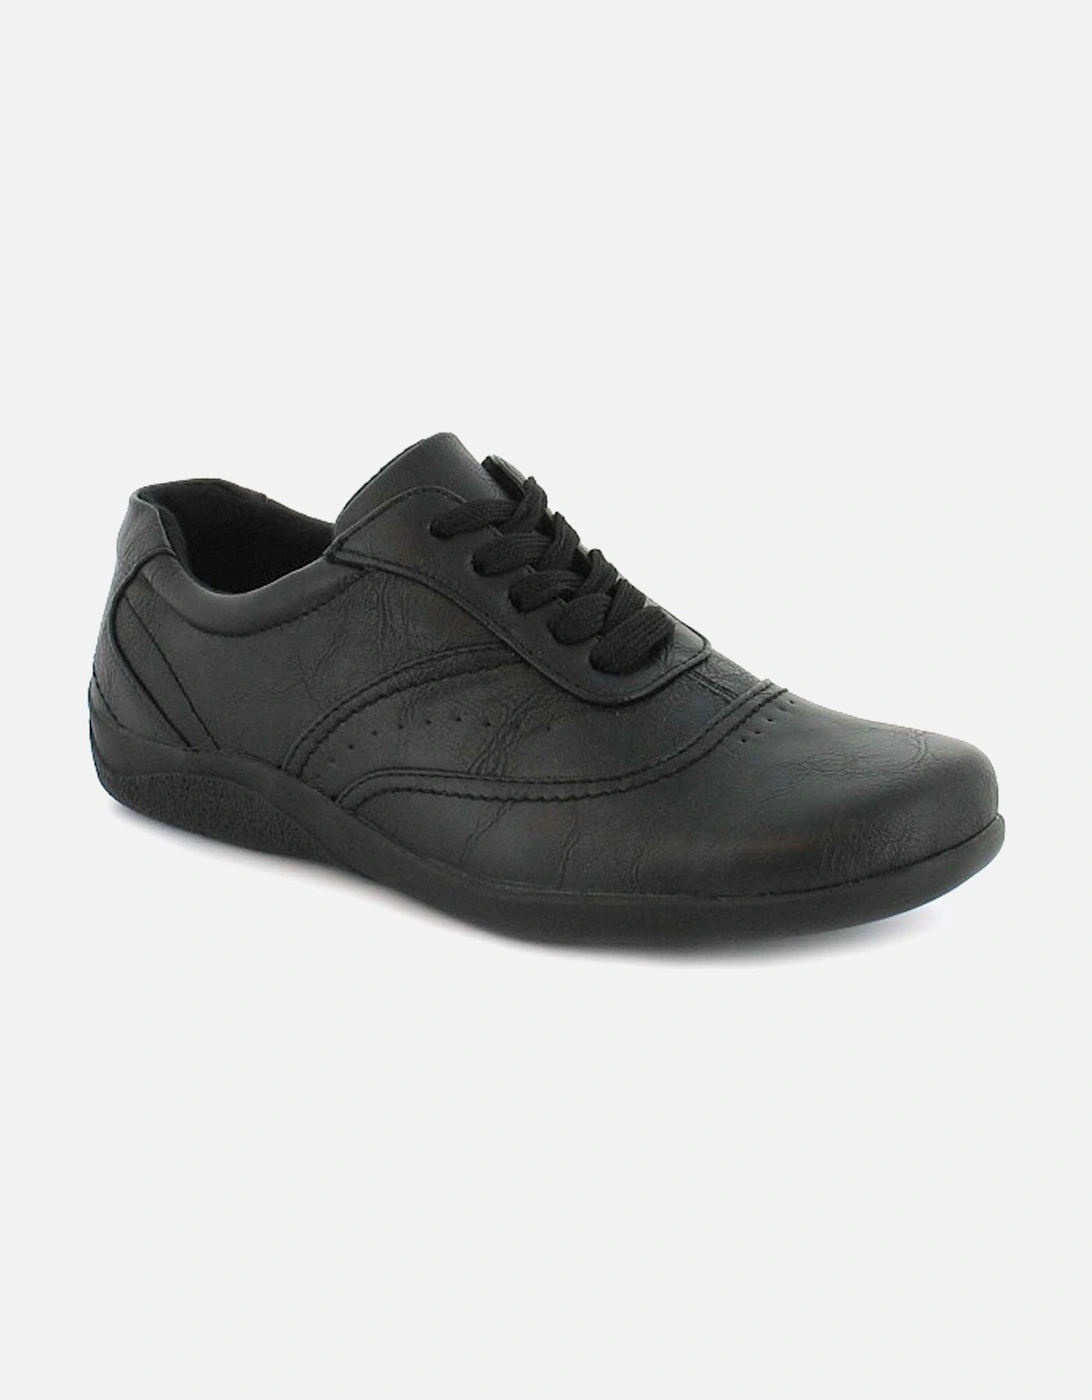 Womens Shoes Flat Valary Lace Up black UK Size, 6 of 5